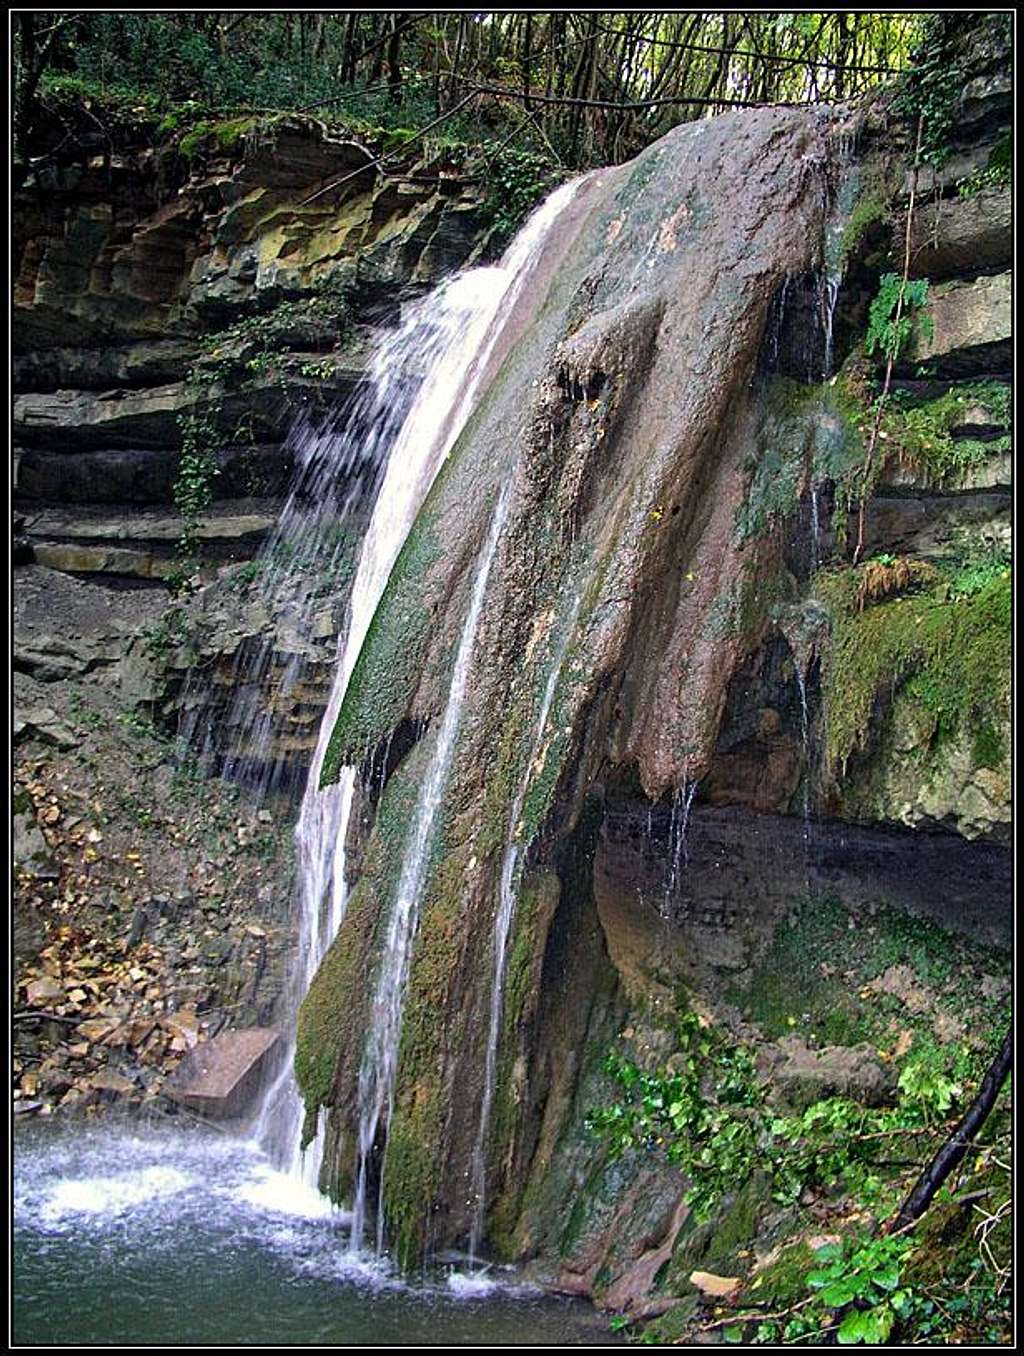 The flow stone waterfall on Vruja creek